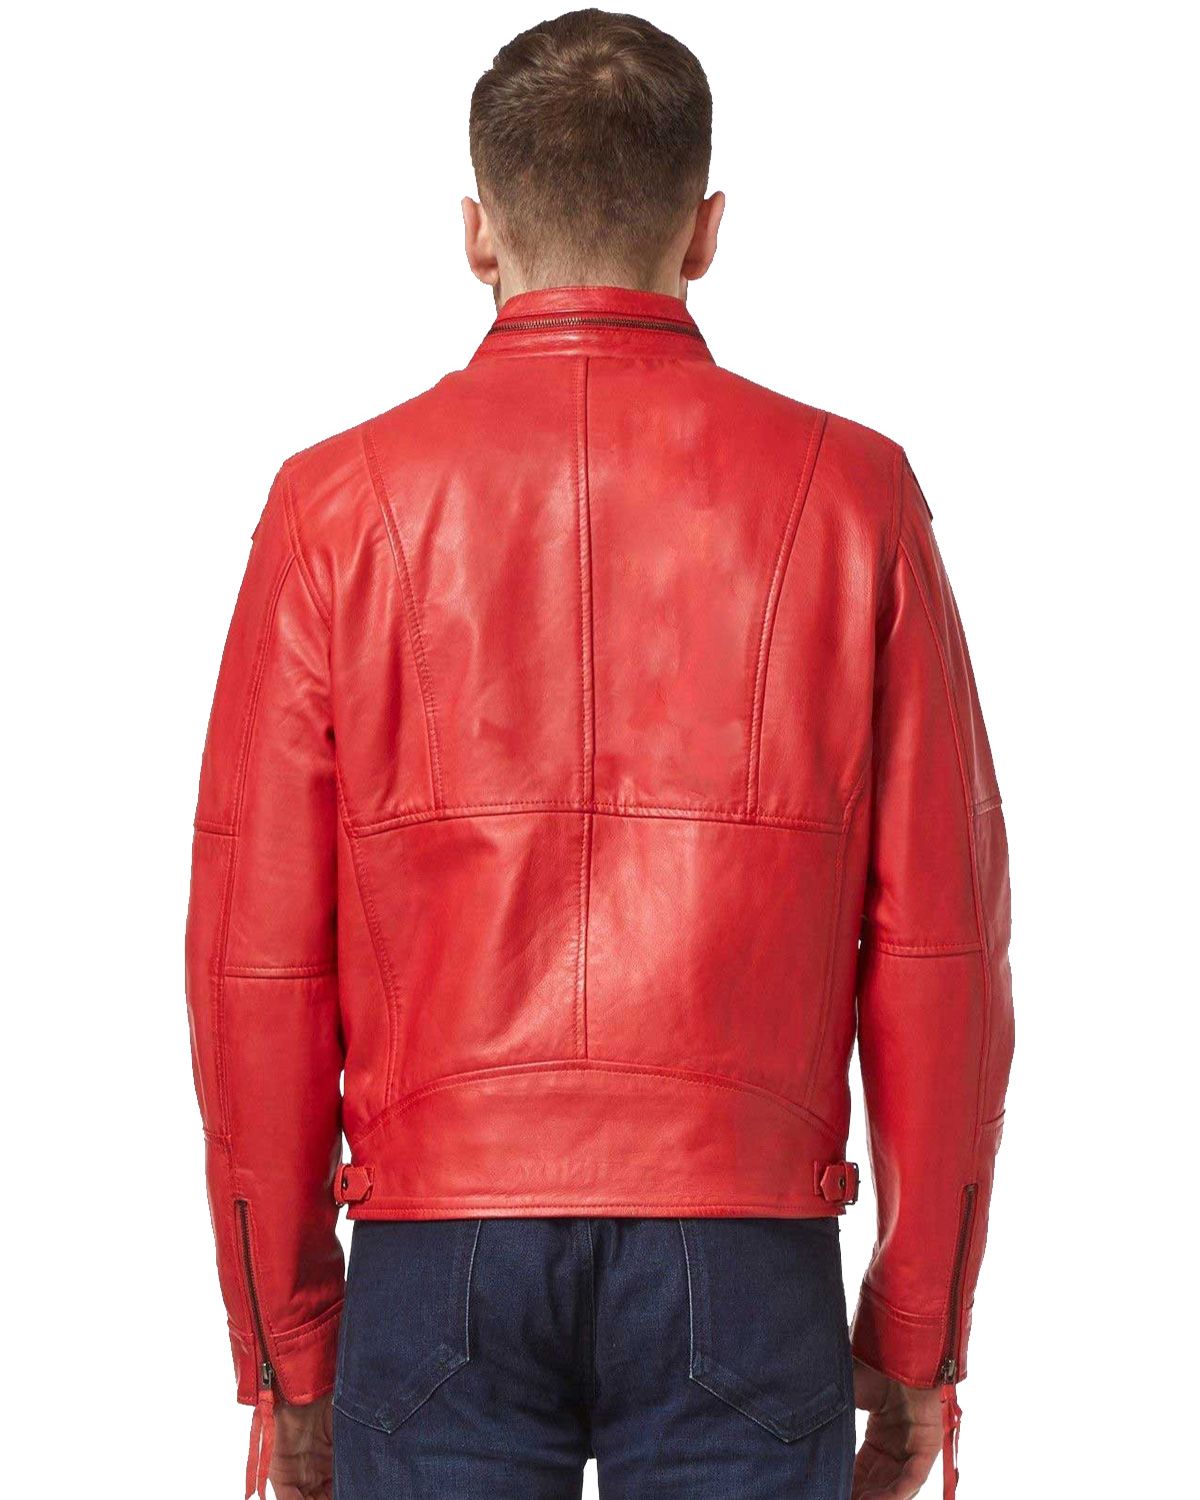 Elite Men's Classic Stylish Red Biker Real Leather Jacket